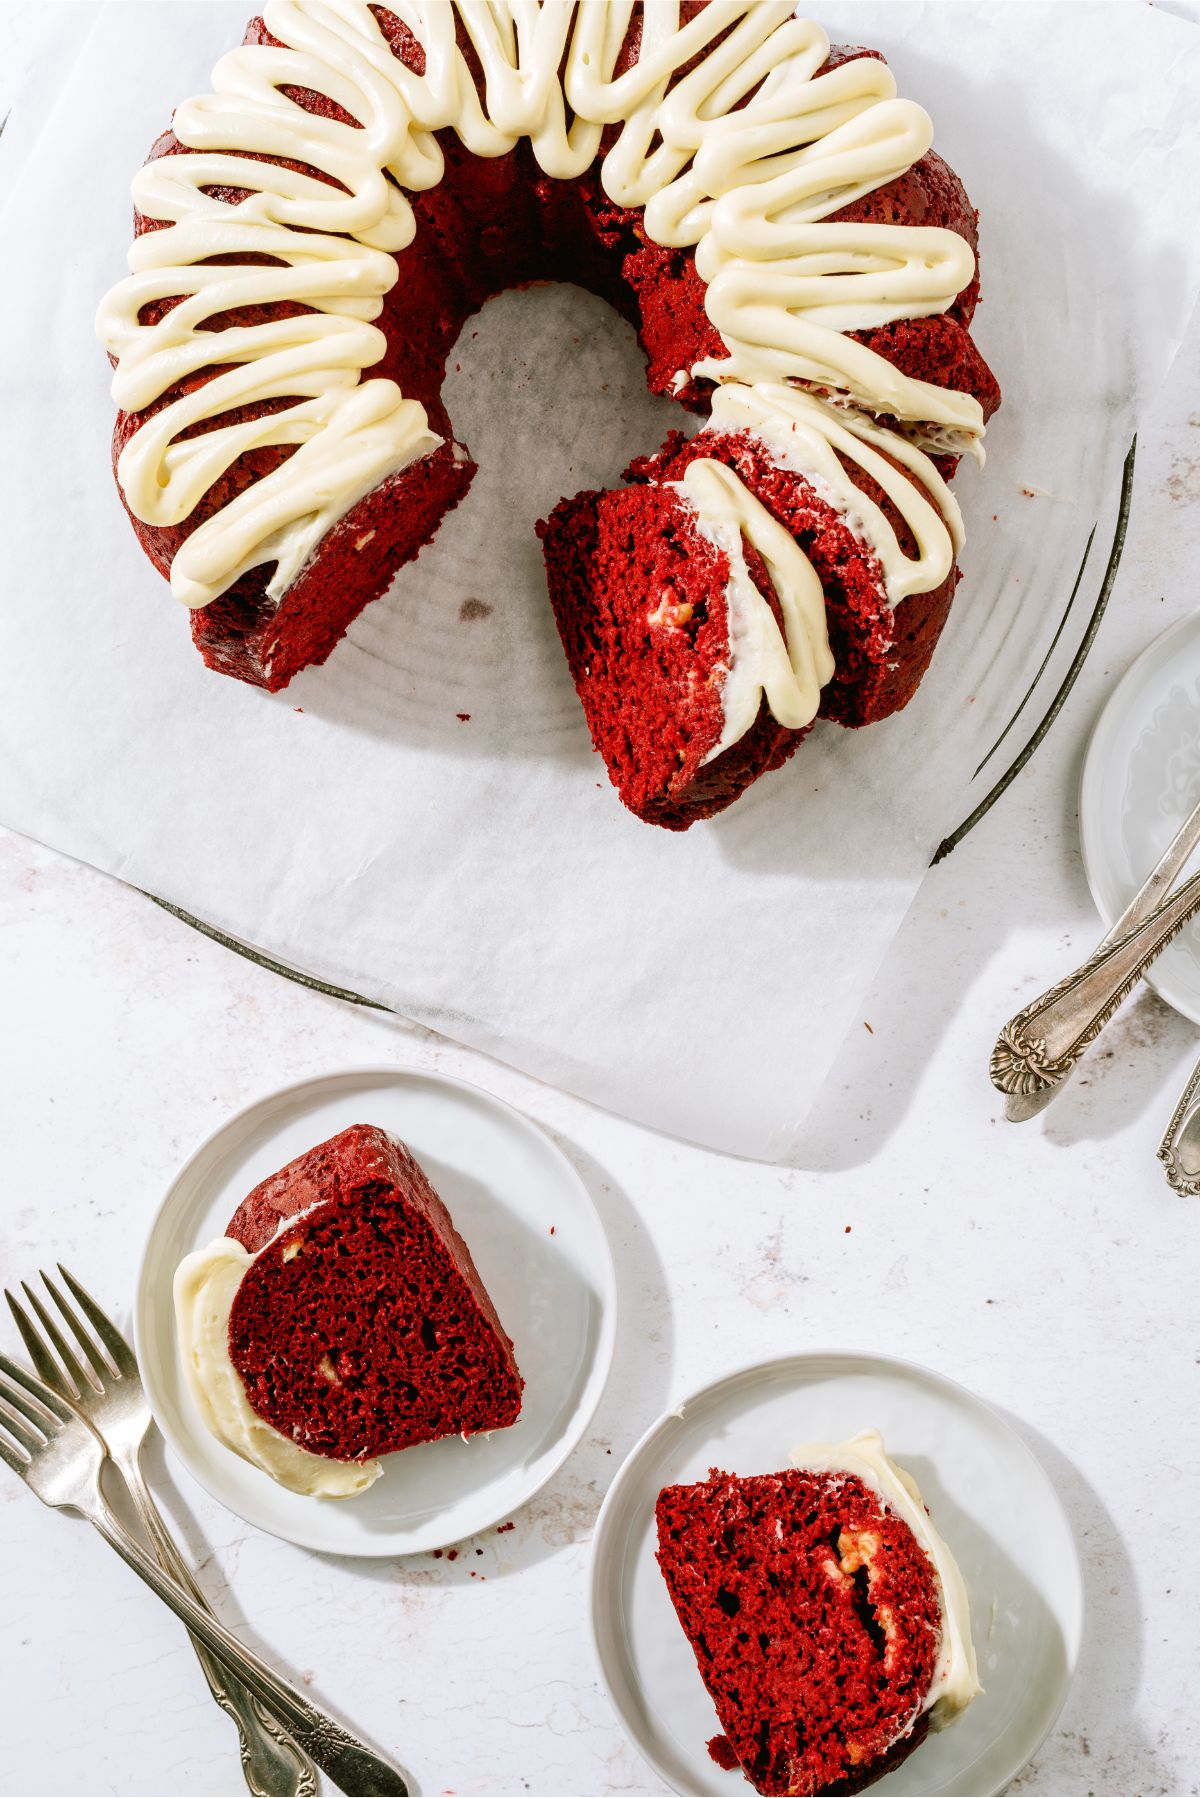 2 Slices of Red Velvet Bundt Cake on plates with forks